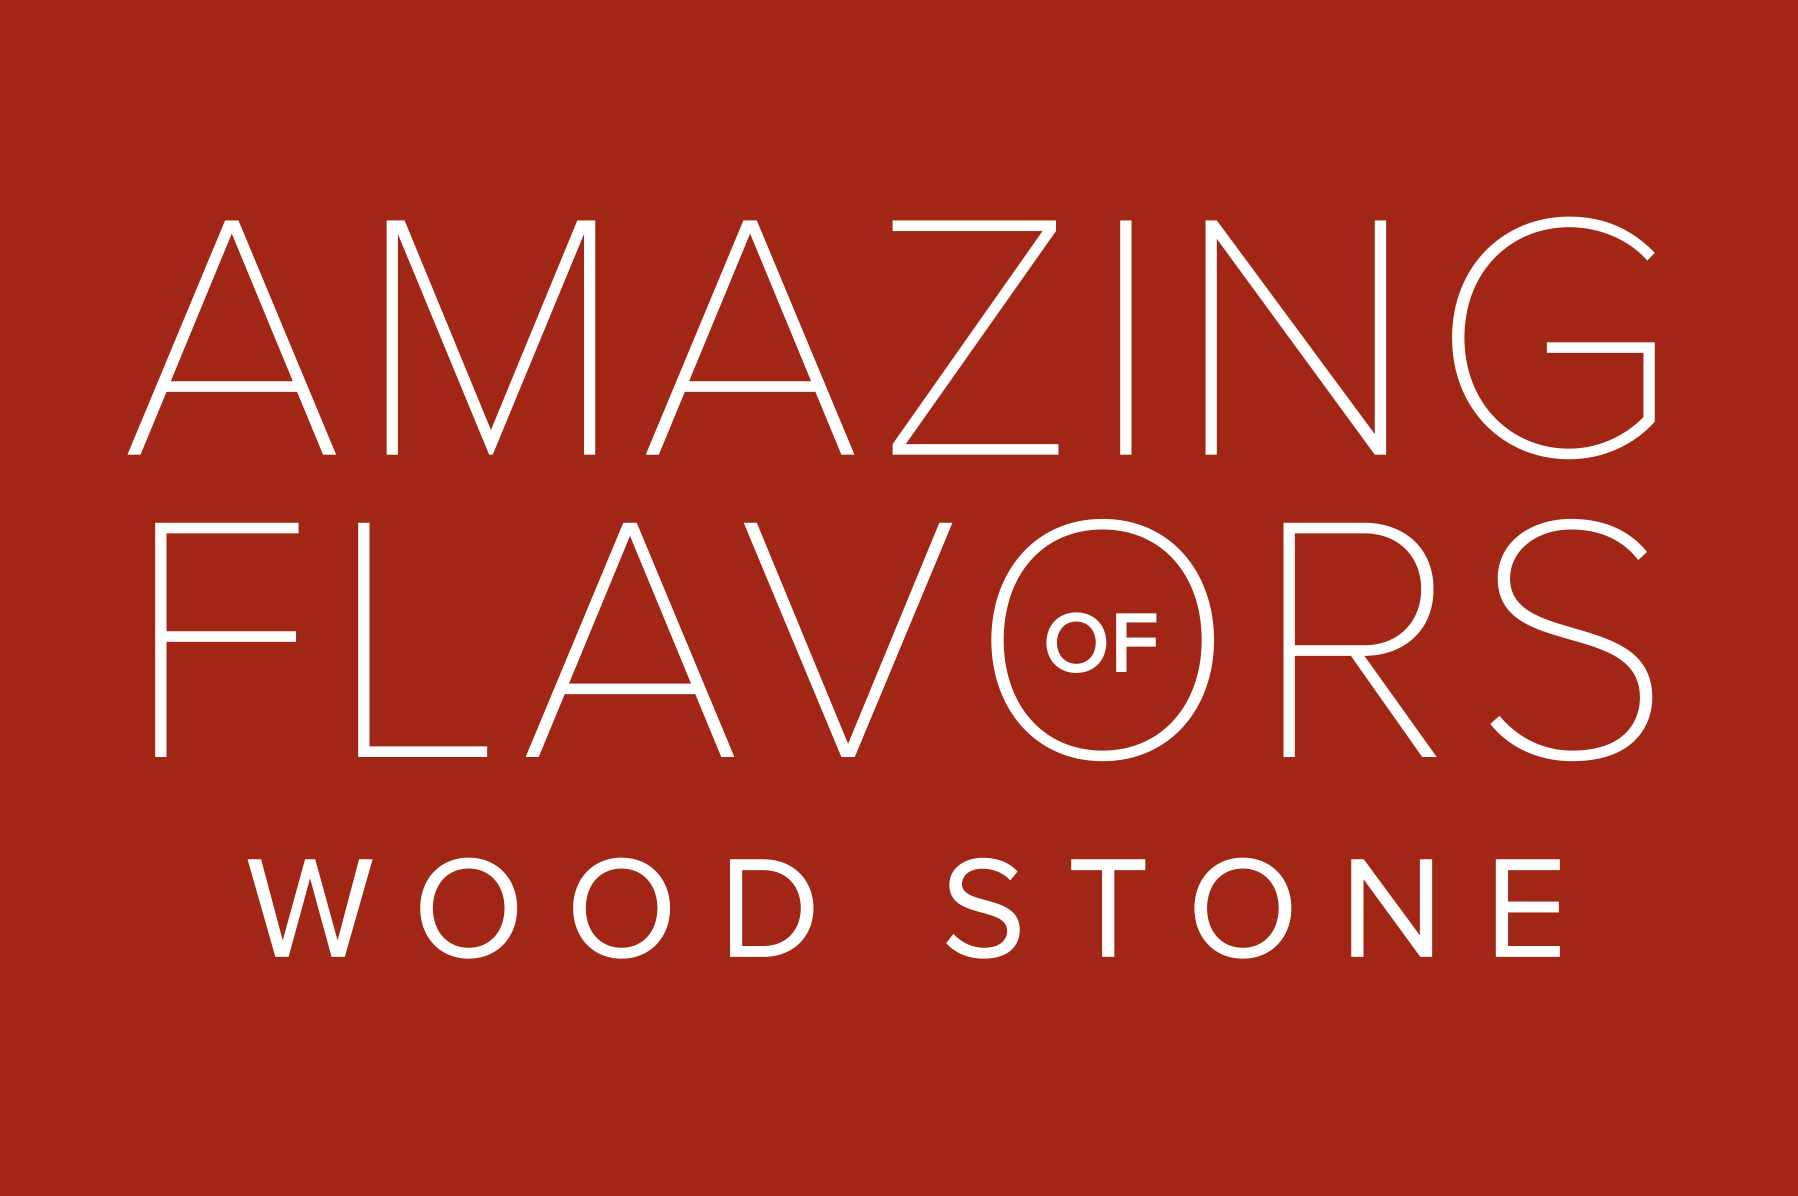 Amazing Flavors of Wood Stone